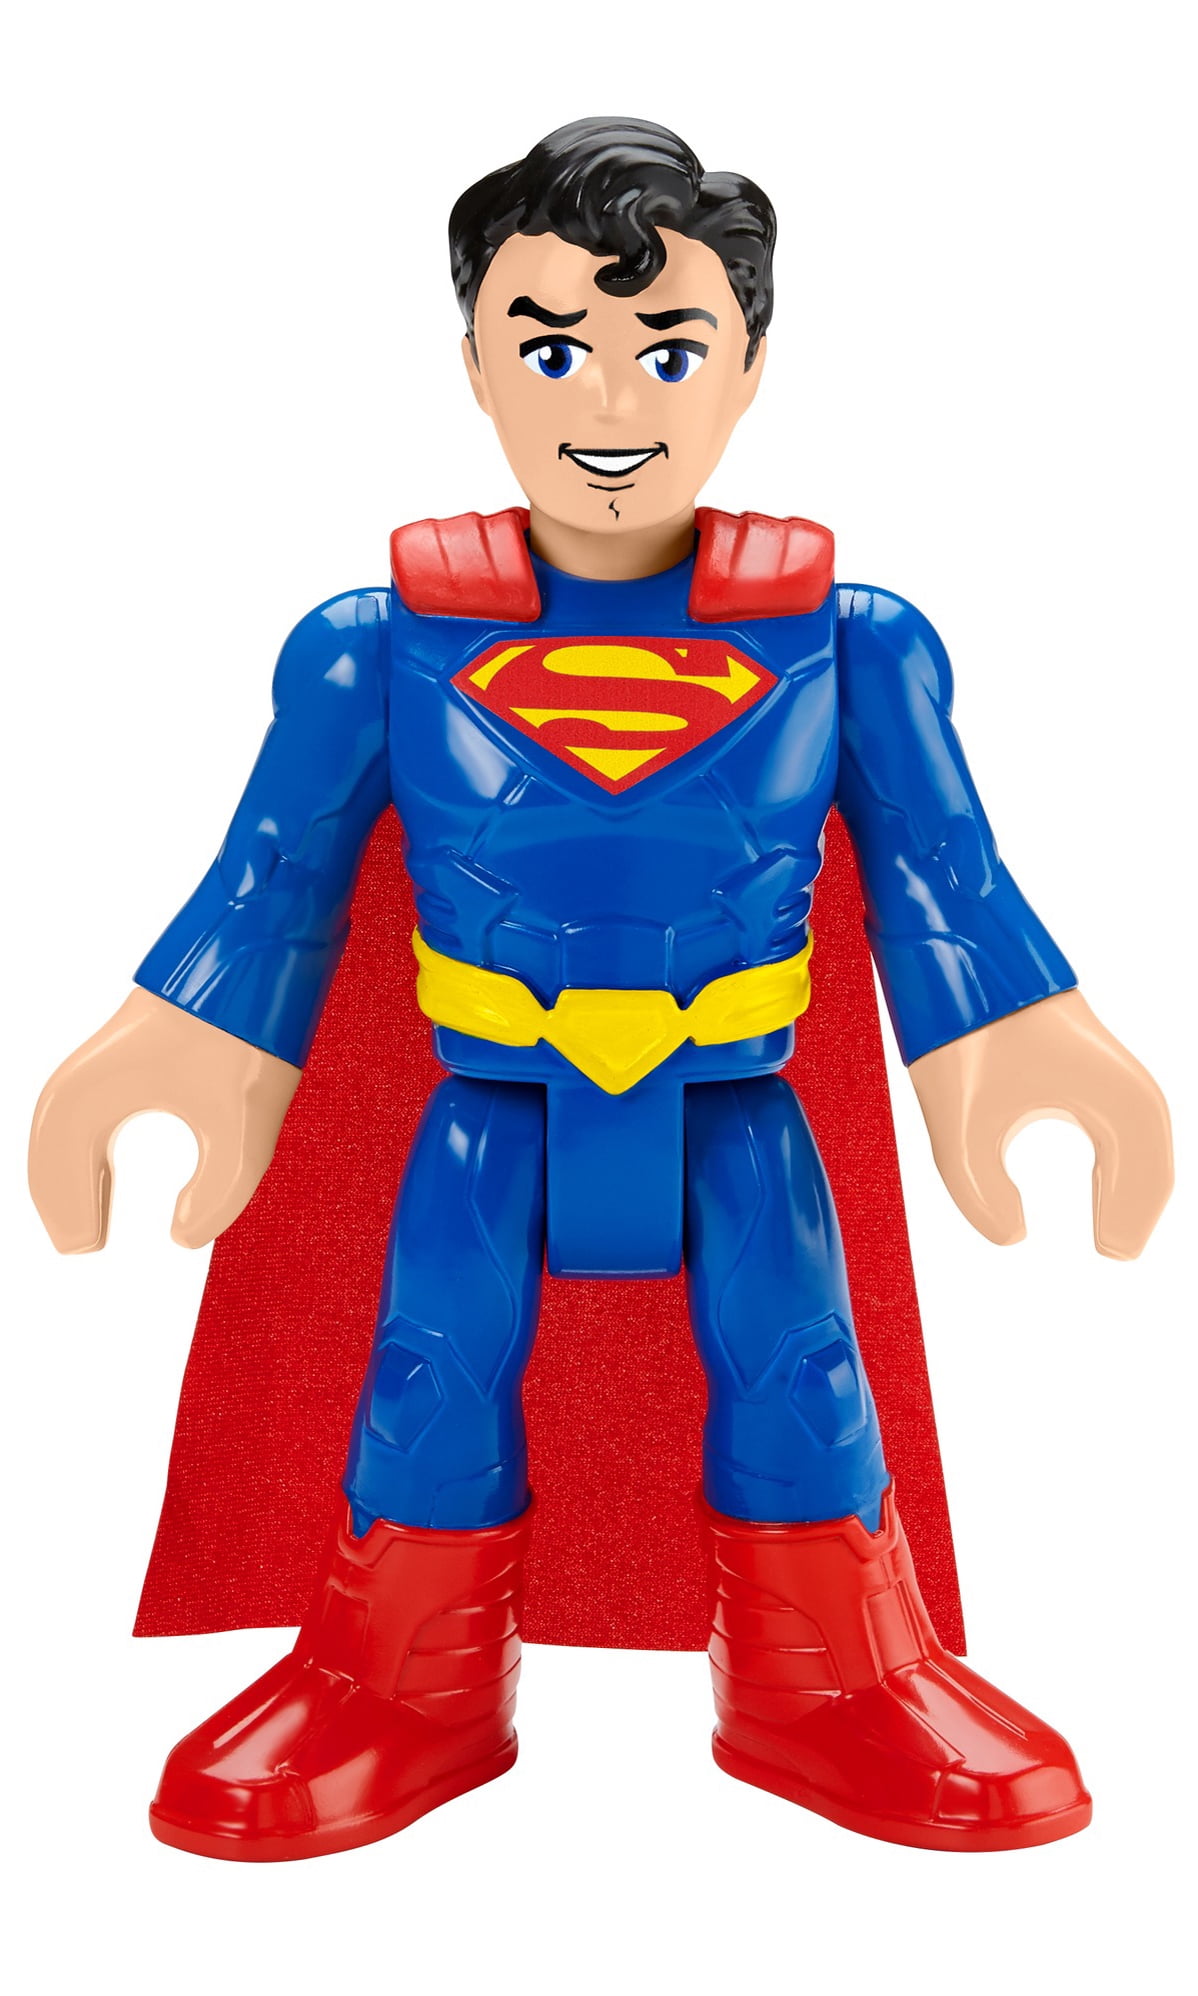 Fisher-Price Imaginext DC Super Friends Darkseid Superman Pack 